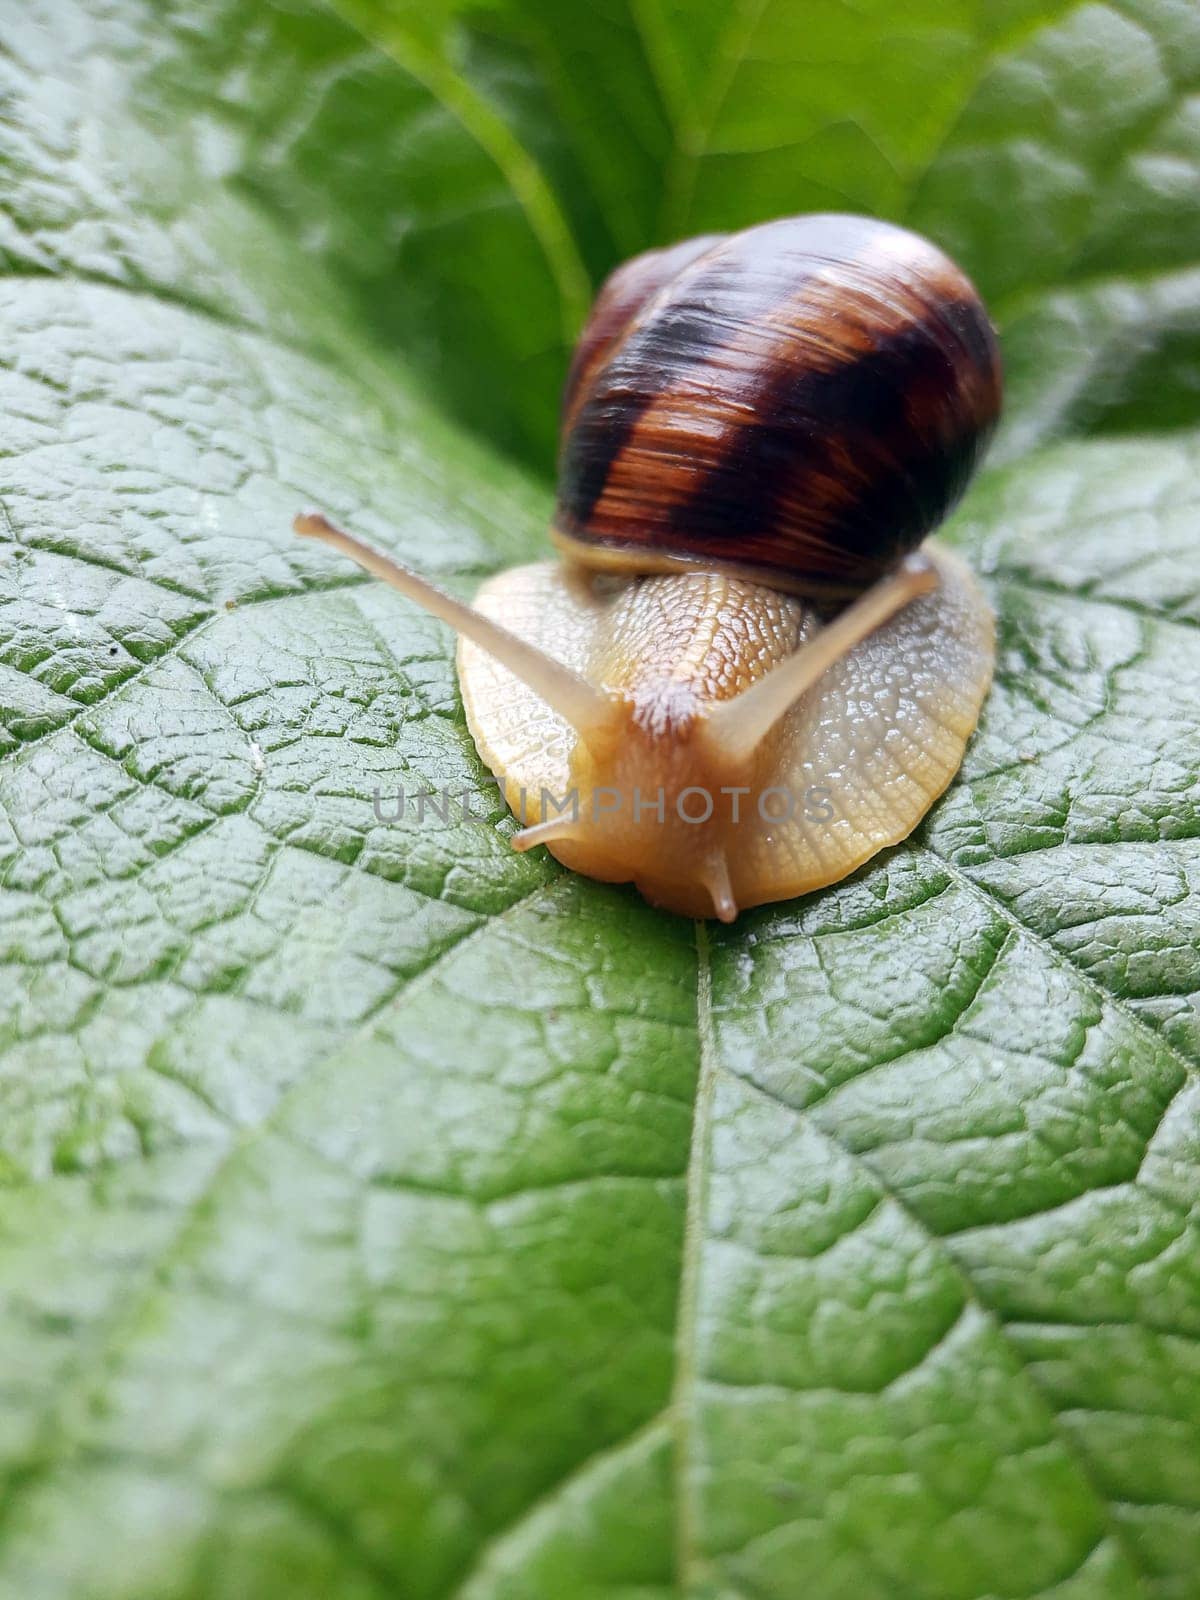 Snail grape close-up on a green leaf after rain.